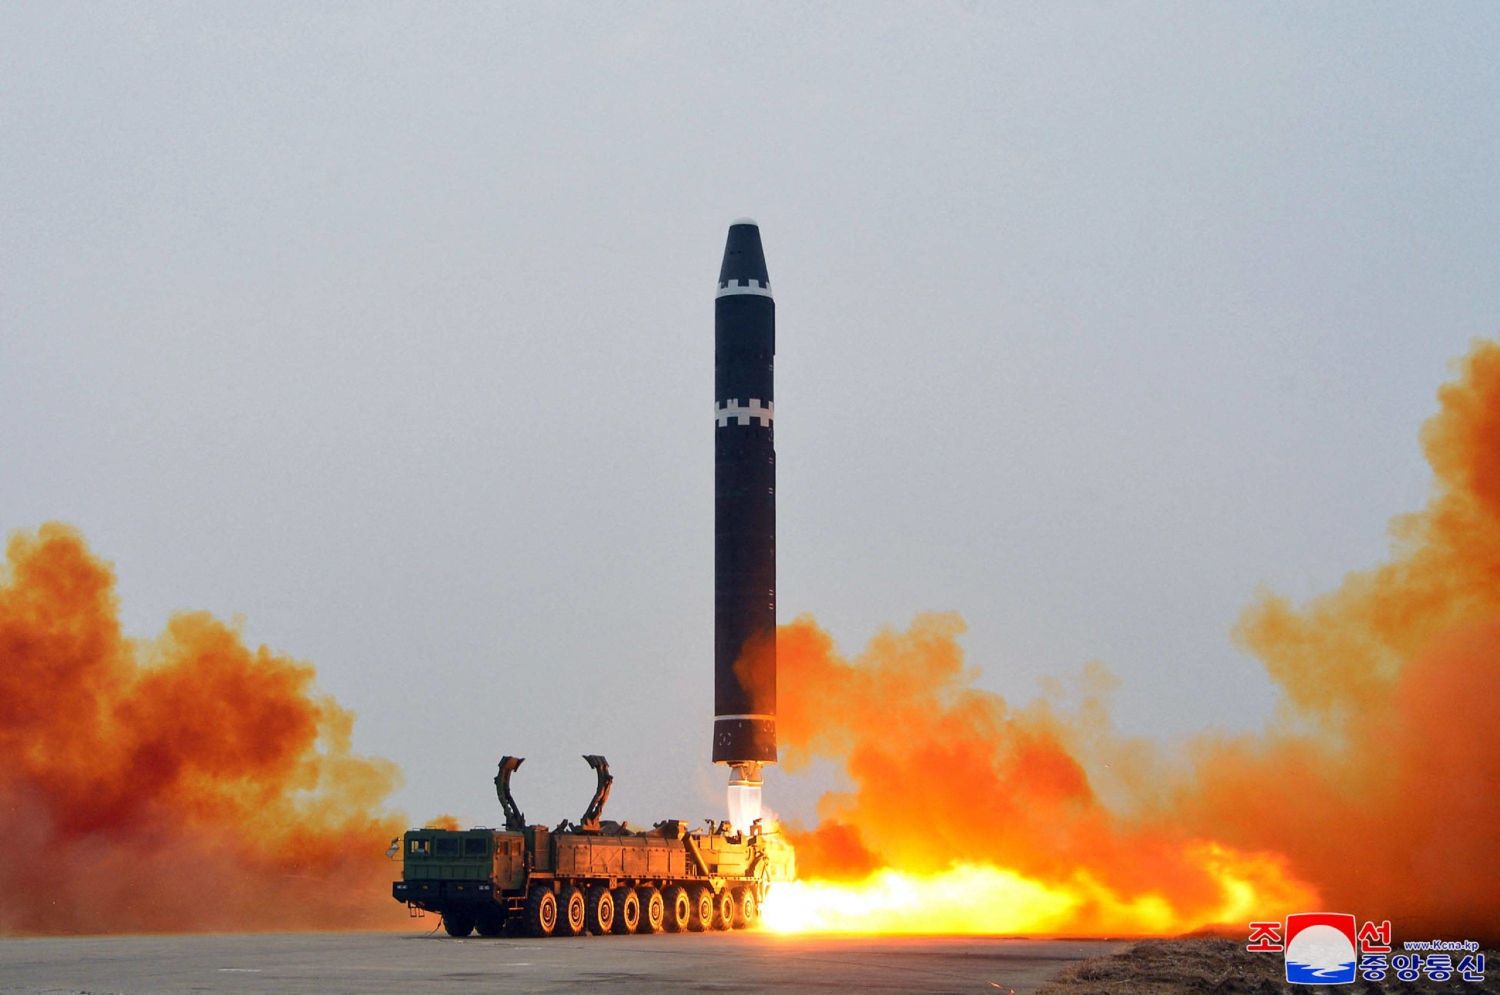 North Korean Hwasong-15 intercontinental ballistic missile